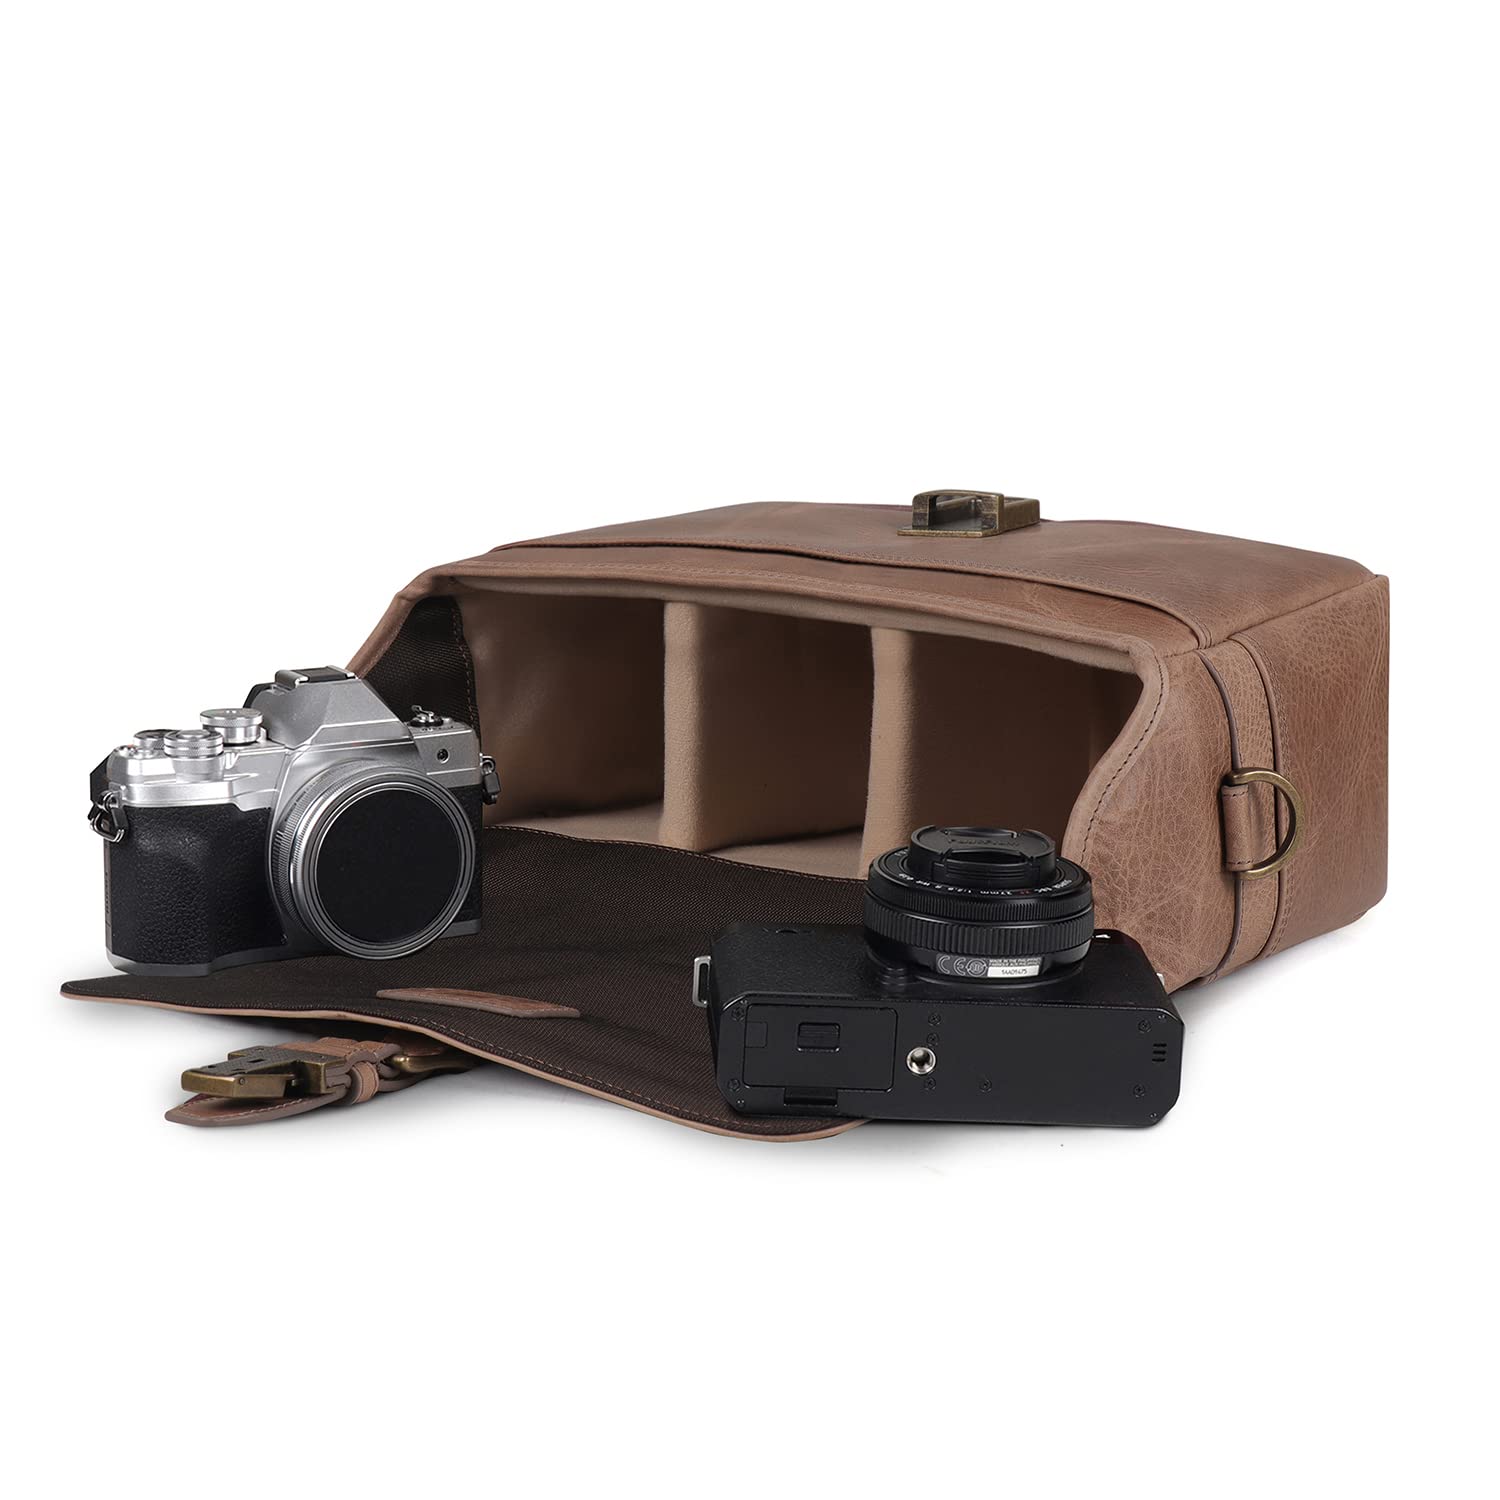 MegaGear Torres Genuine Leather Camera Messenger Bag for Mirrorless, Instant and DSLR Cameras